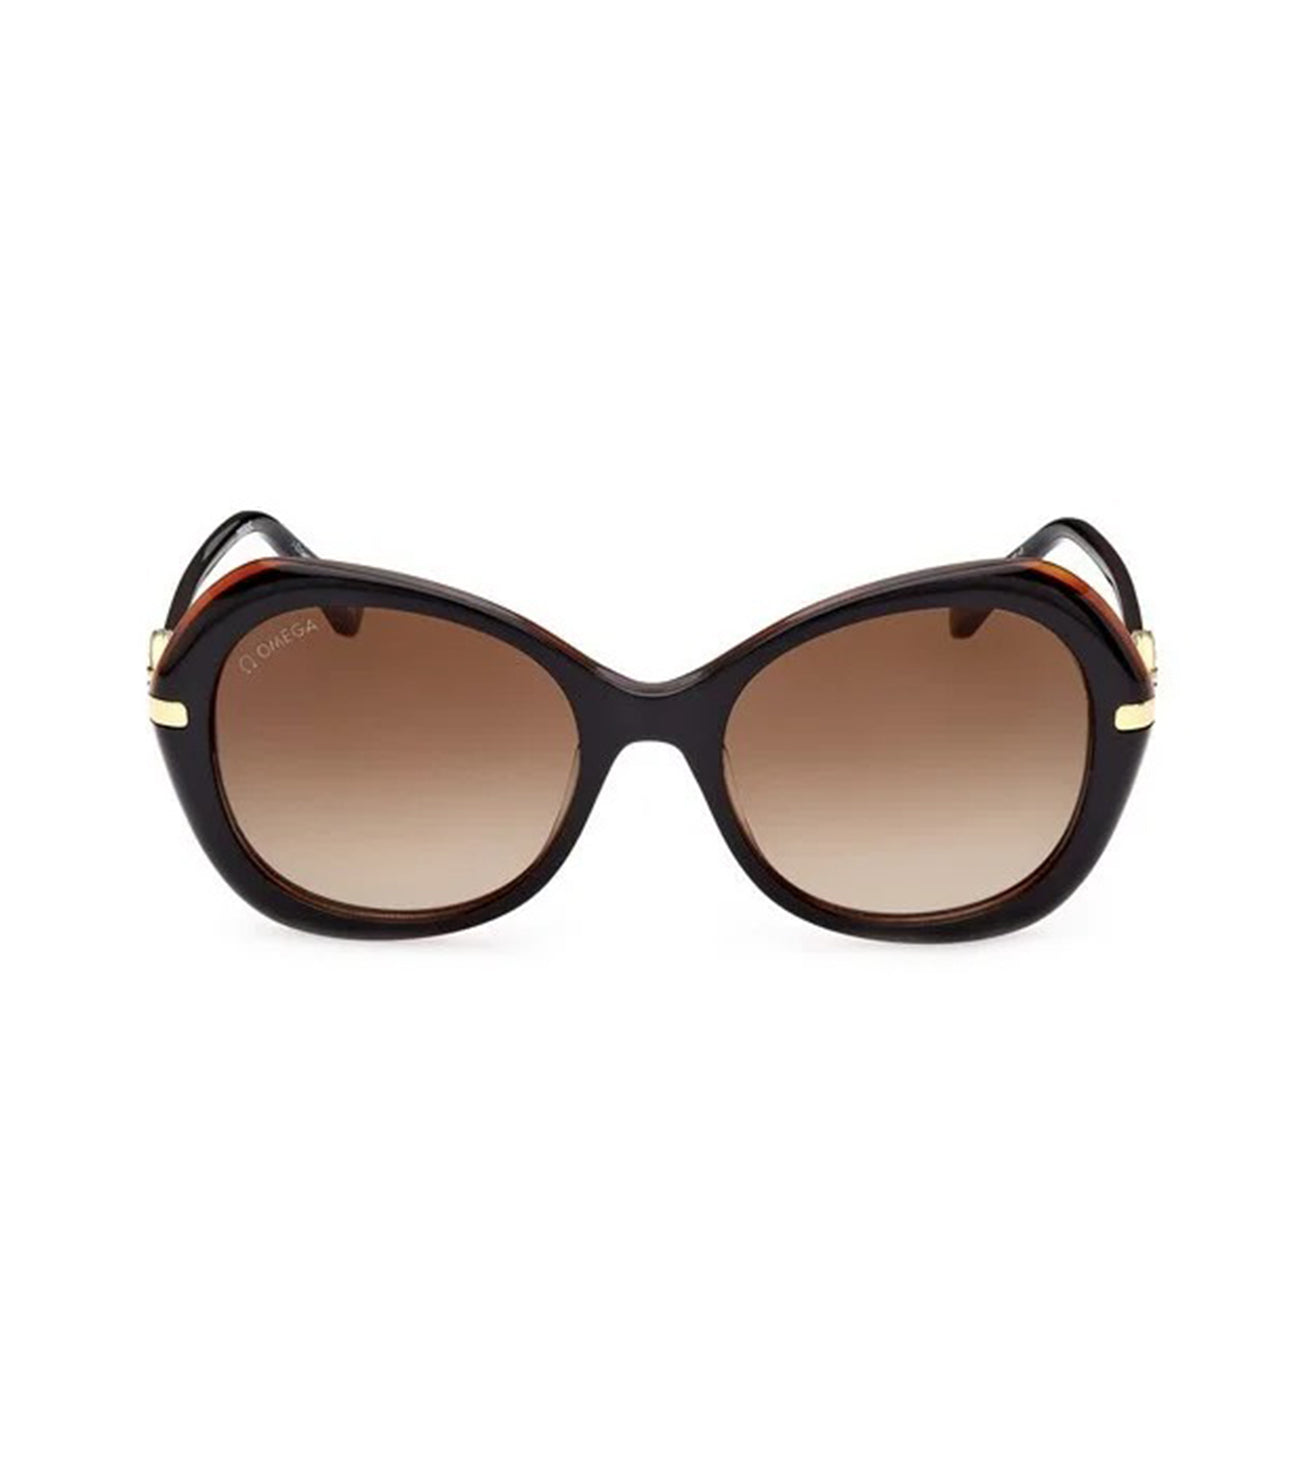 Omega Women's Grad Brown Butterfly Sunglasses